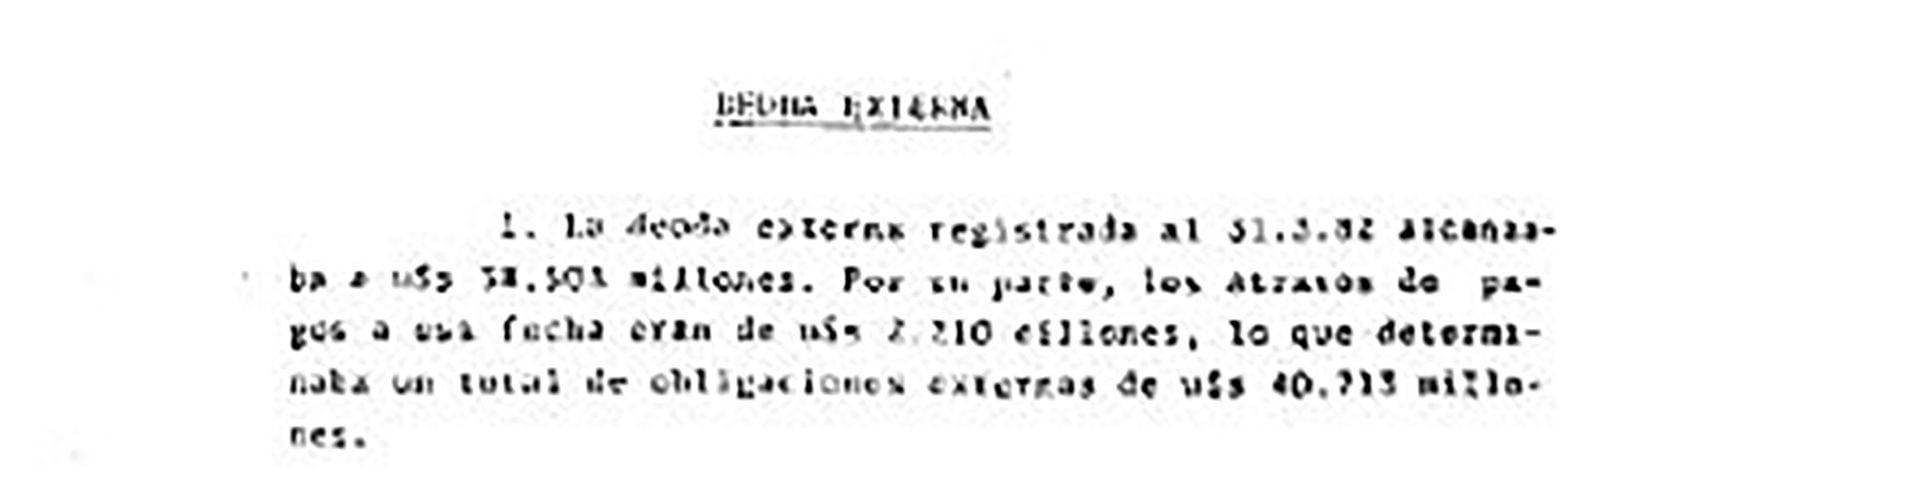 Informe a la Junta Militar sobre la Deuda Externa del 4 de julio de 1983